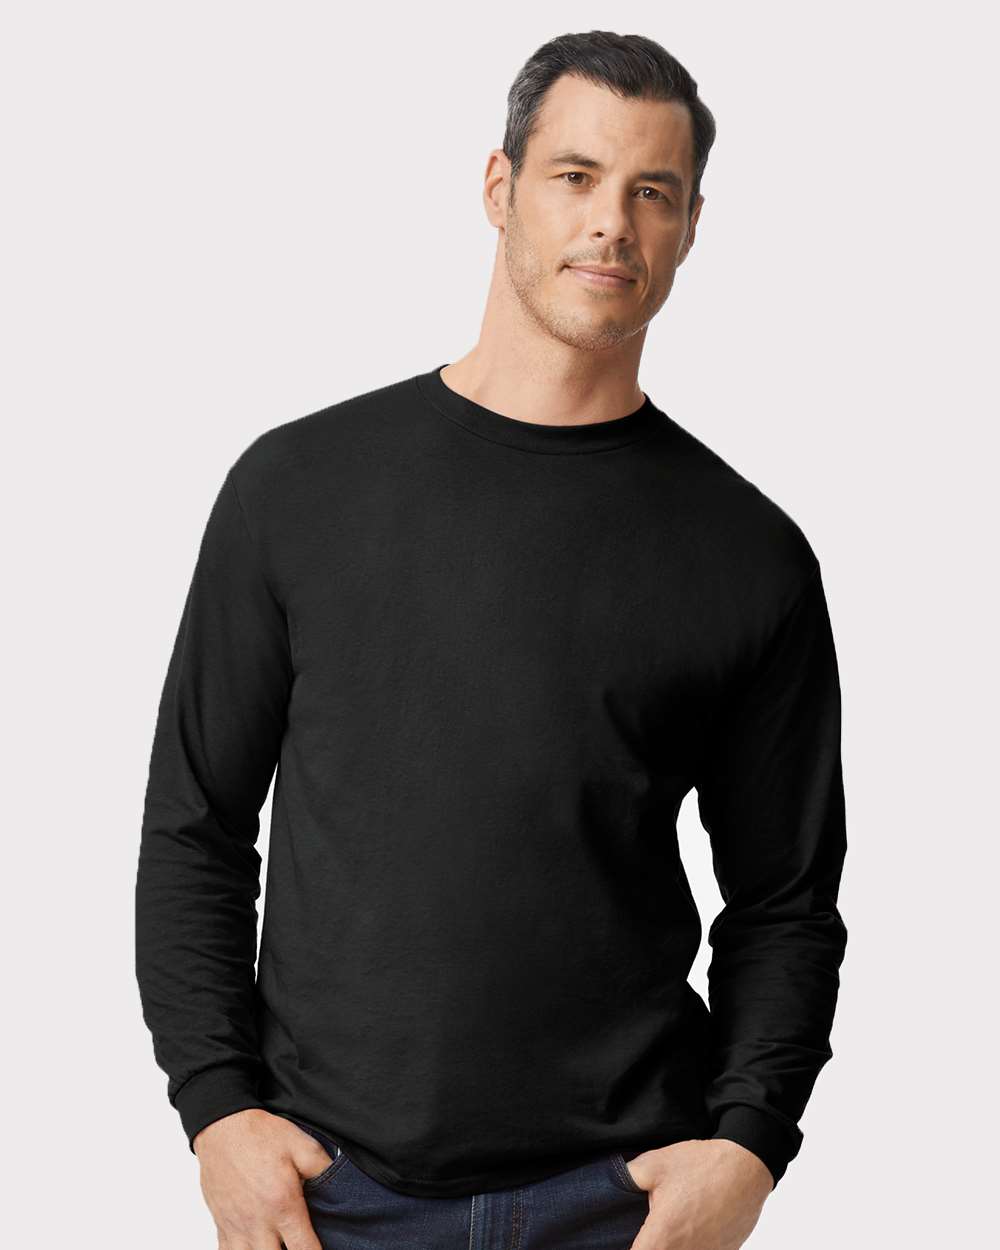 Men's Long-Sleeve T-Shirts, Graphic & Basic Tops